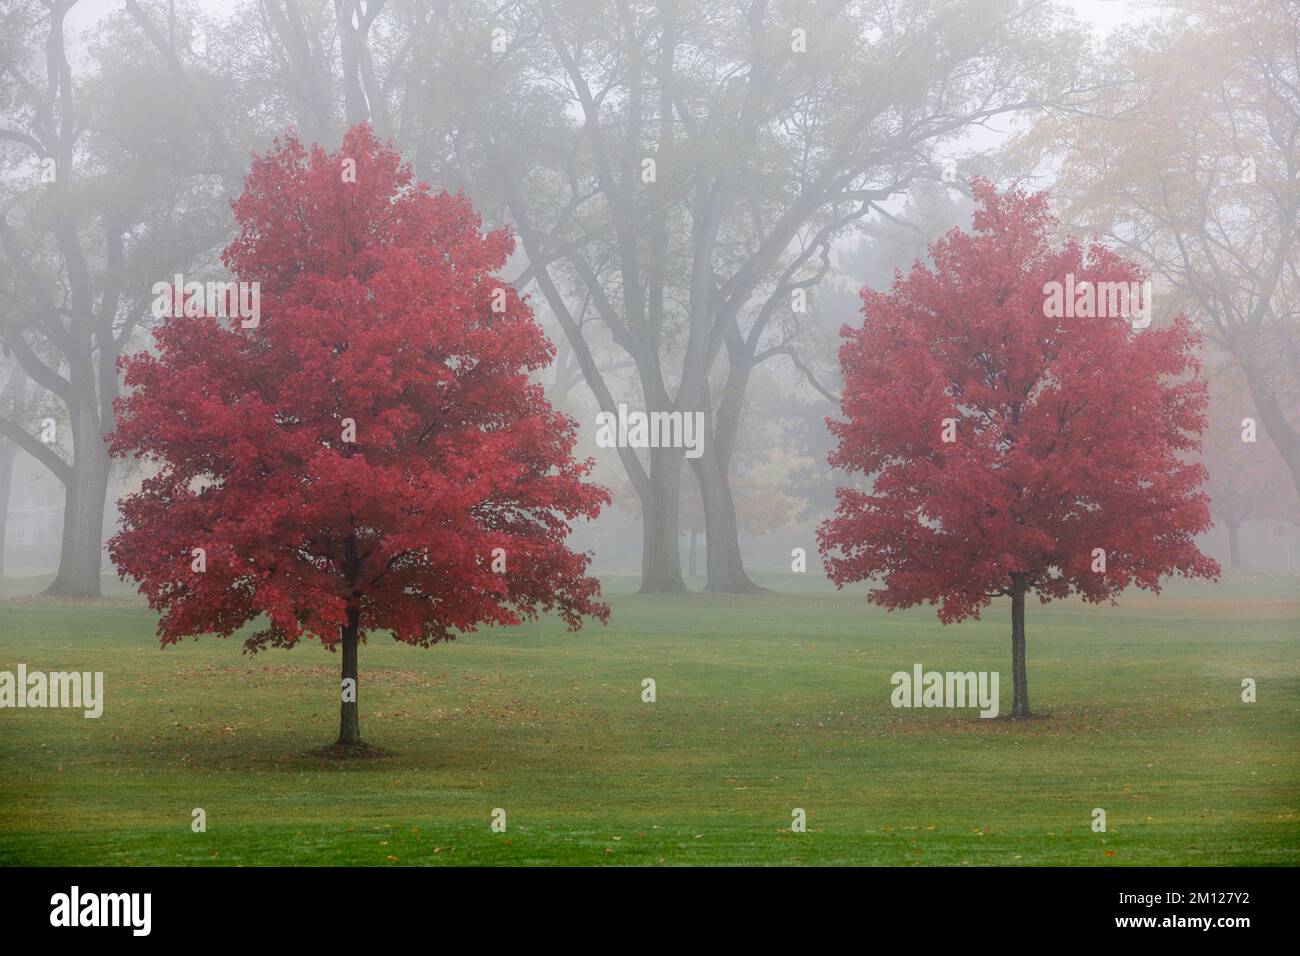 Canada, Ontario, Niagara on the Lake, gruppo di alberi in nebbia Foto Stock